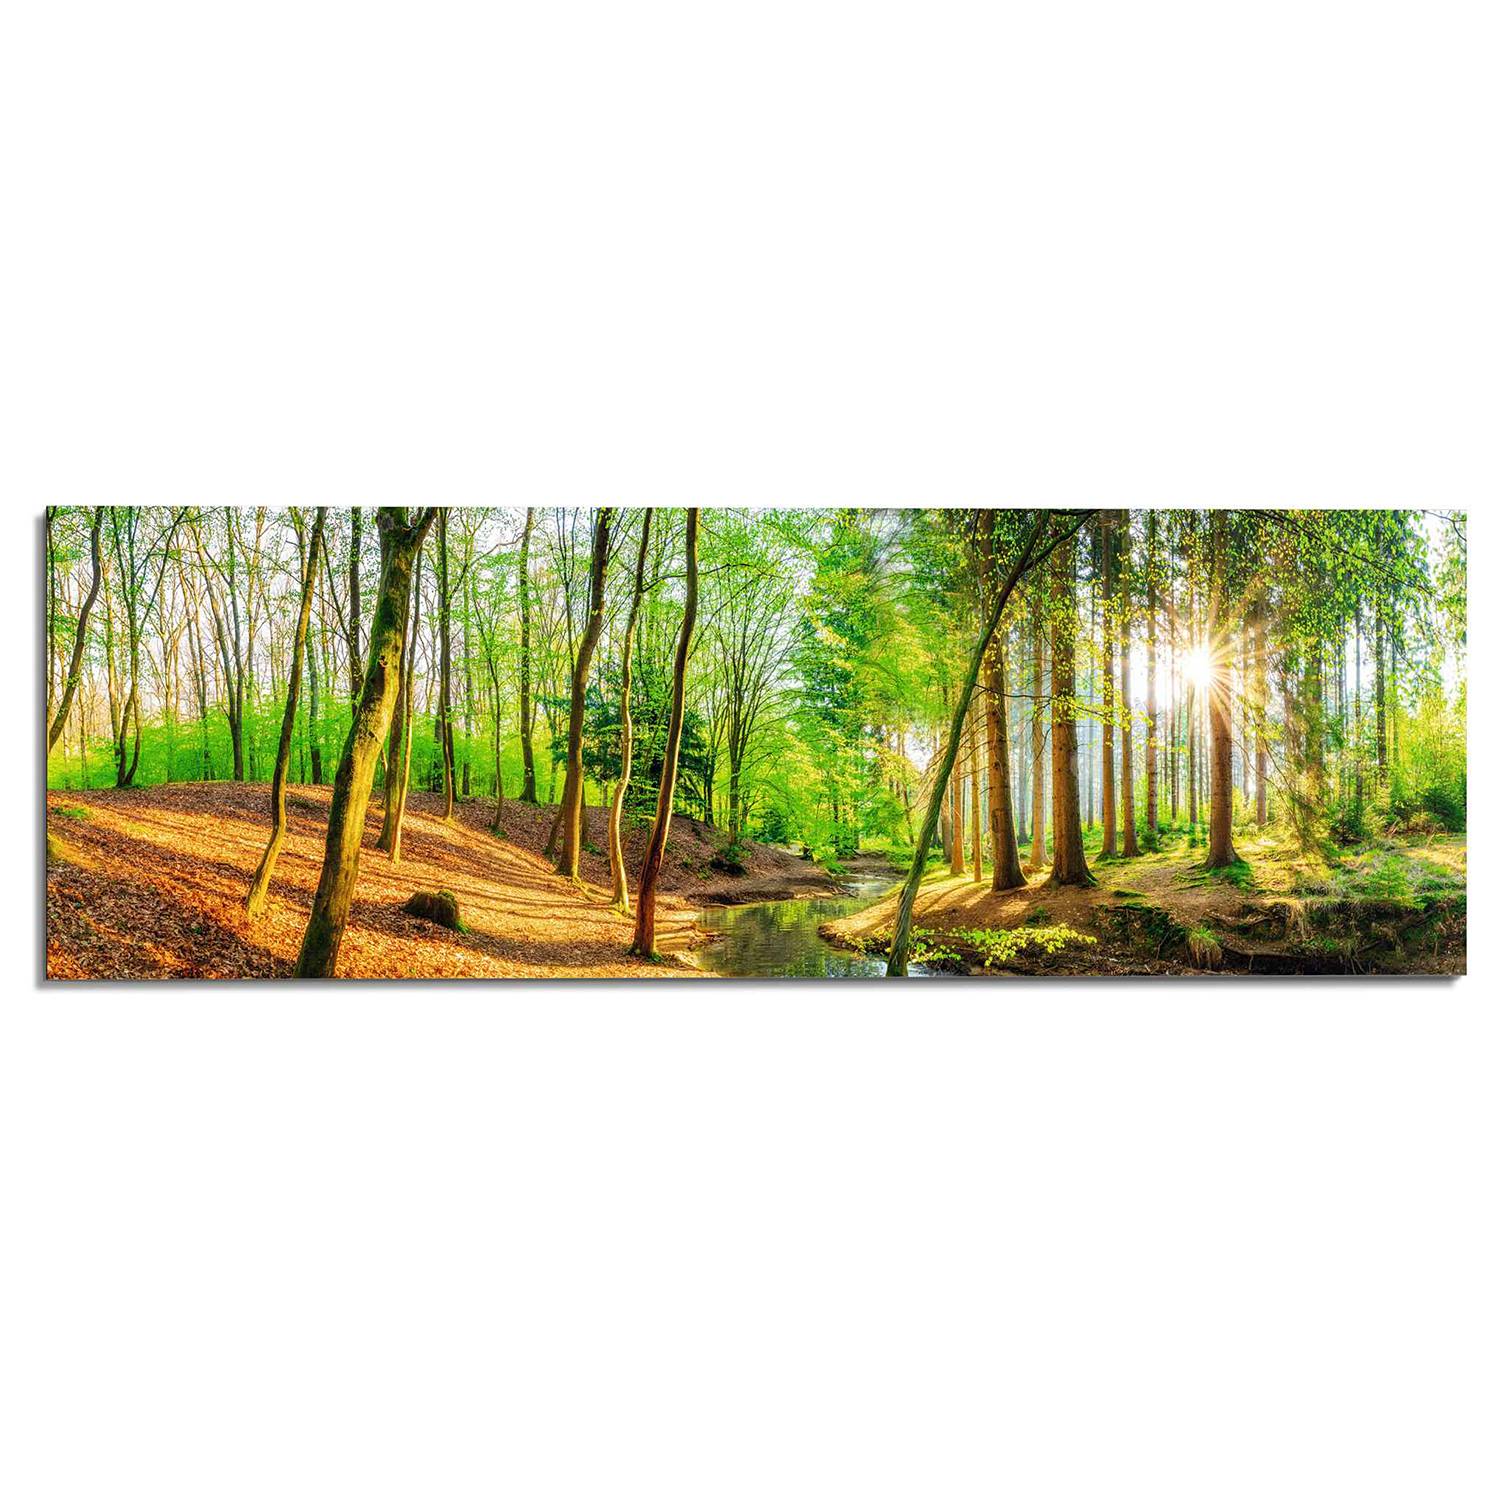 Wandbild Sonniger Wald kaufen | home24